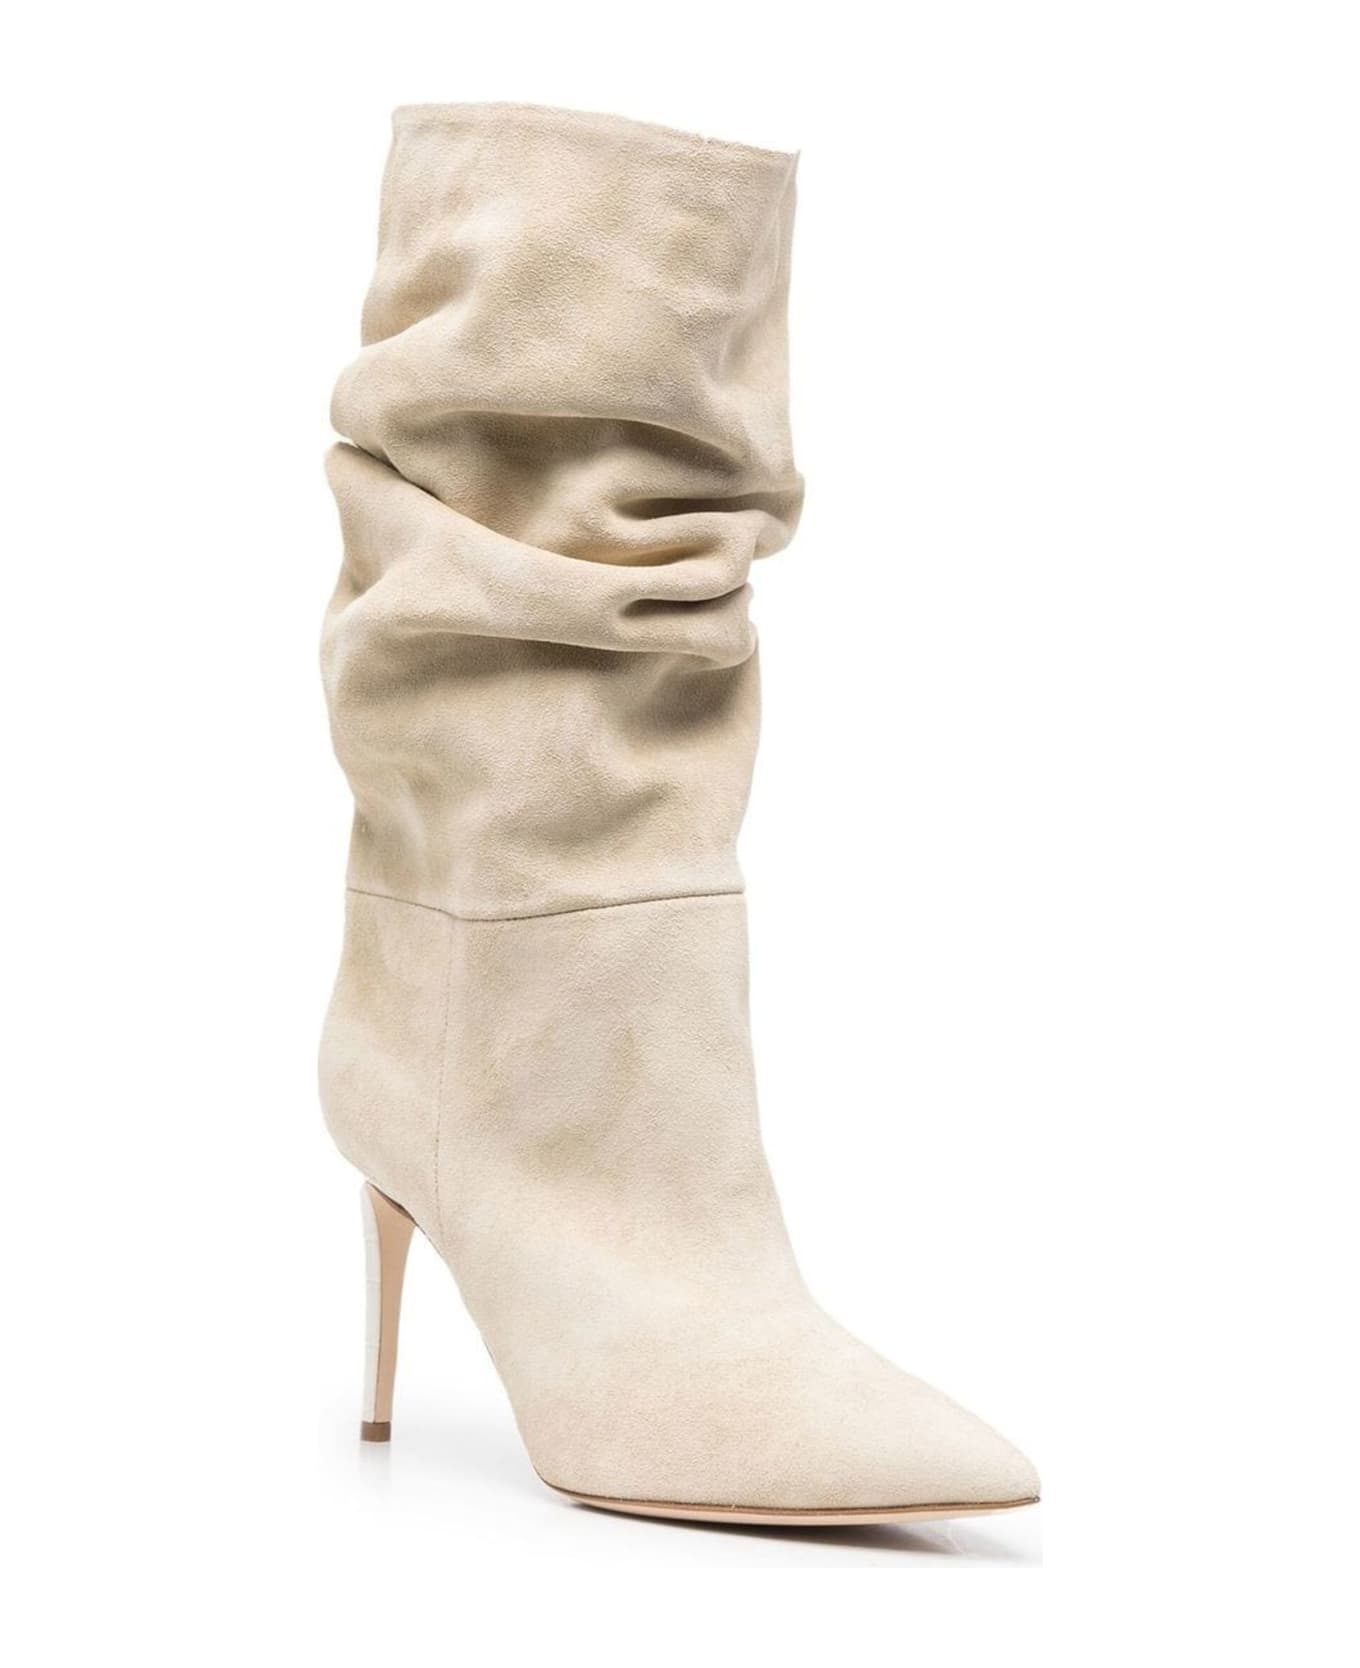 Paris Texas Beige Calf Leather Suede Ankle Boots - Beige